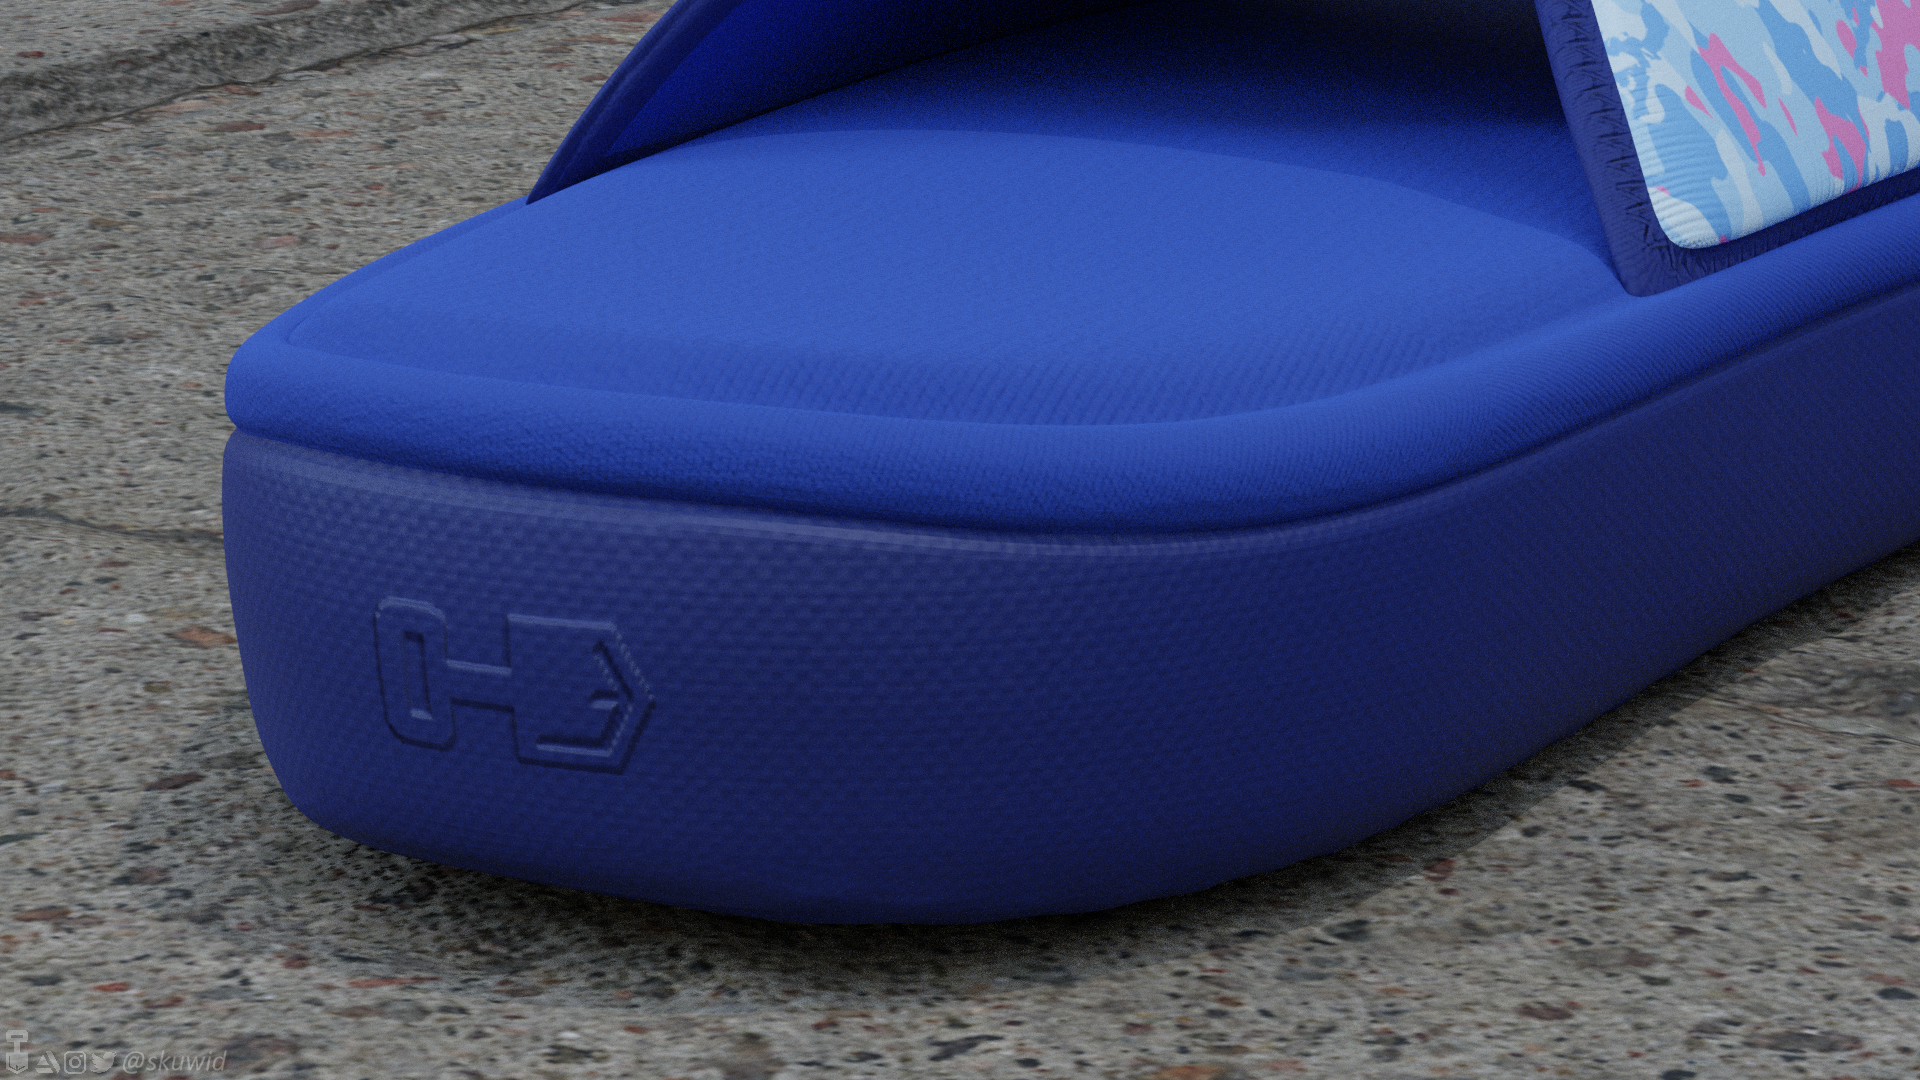 slippers2_detail_back_watermark